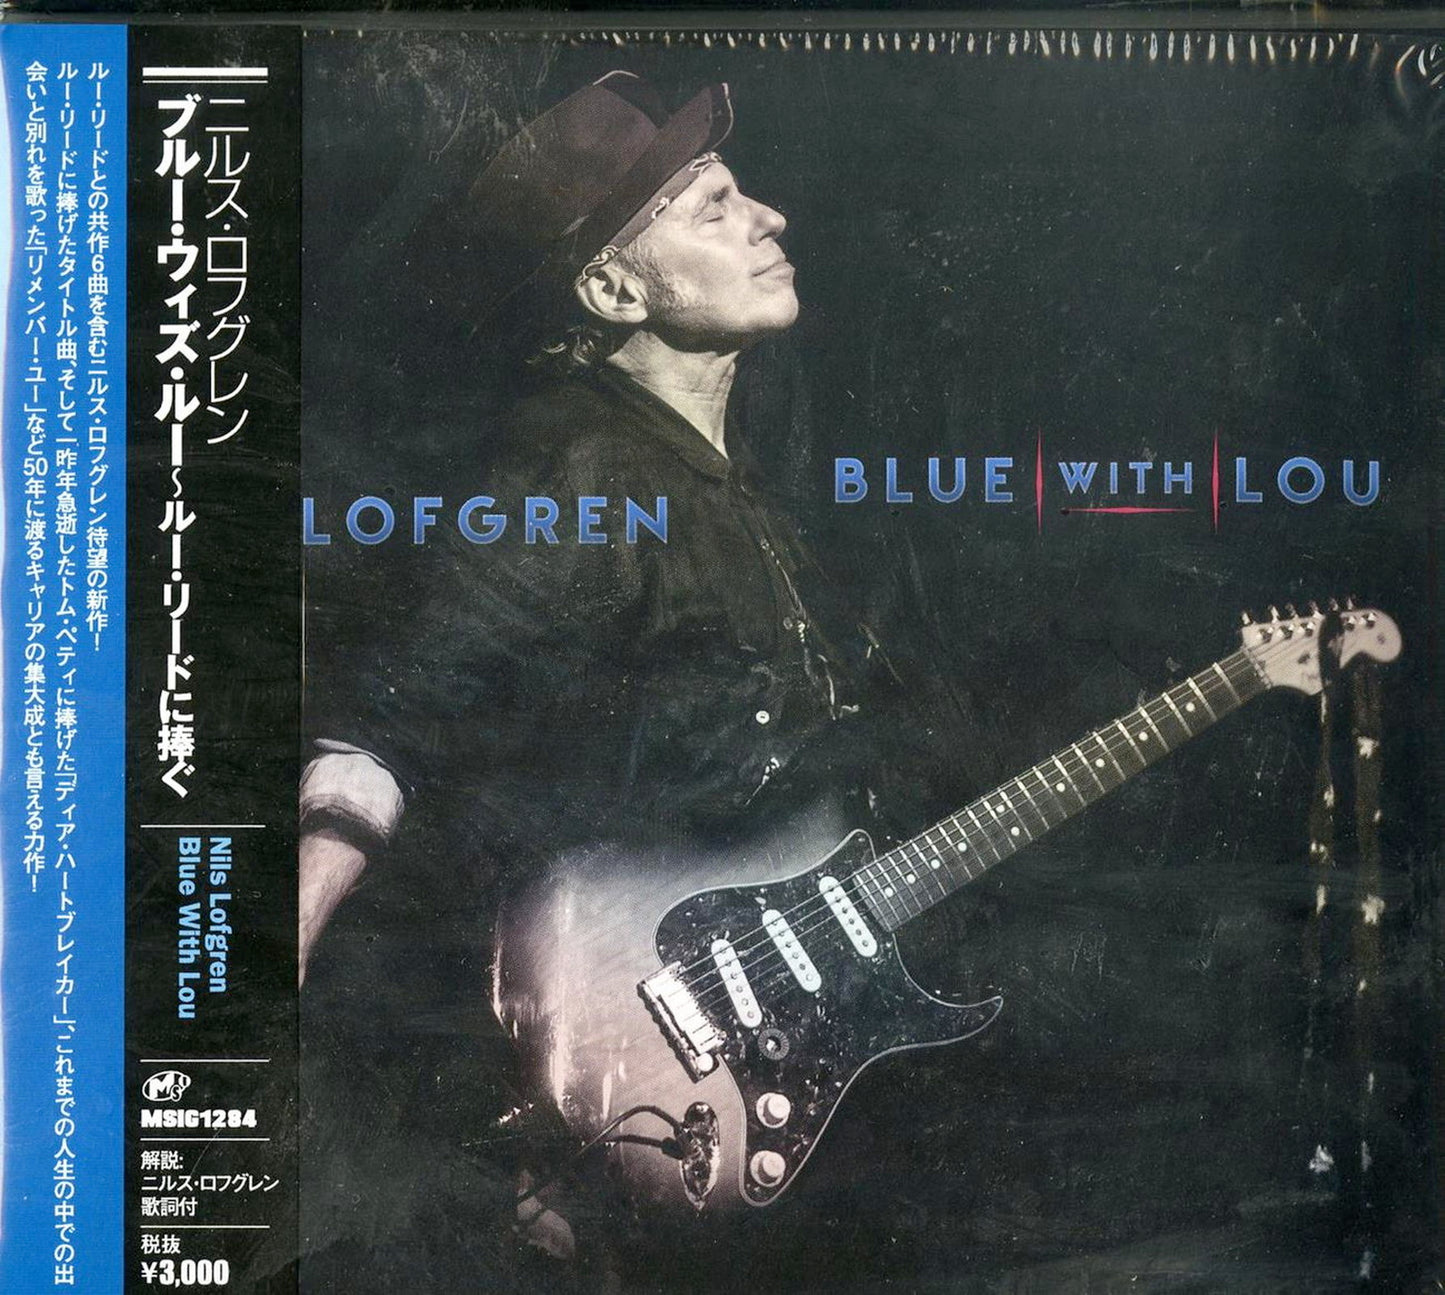 Nils Lofgren - Blue With Lou - Import CD With Japan Obi